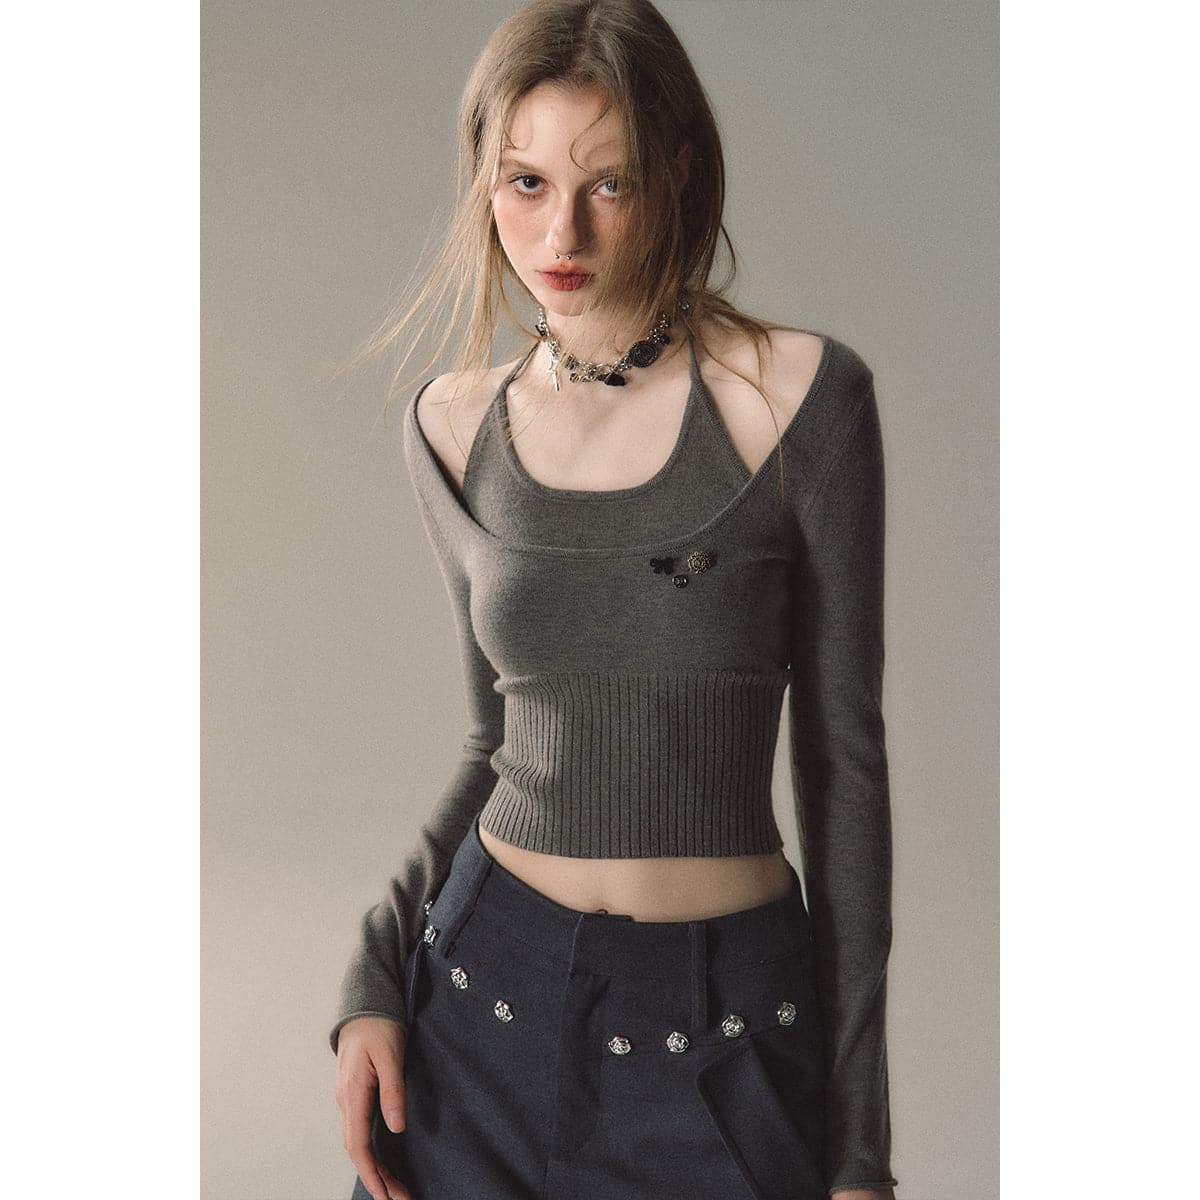 Dark Grey Knit Slim Top - Authentic 2-Piece Design - chiclara